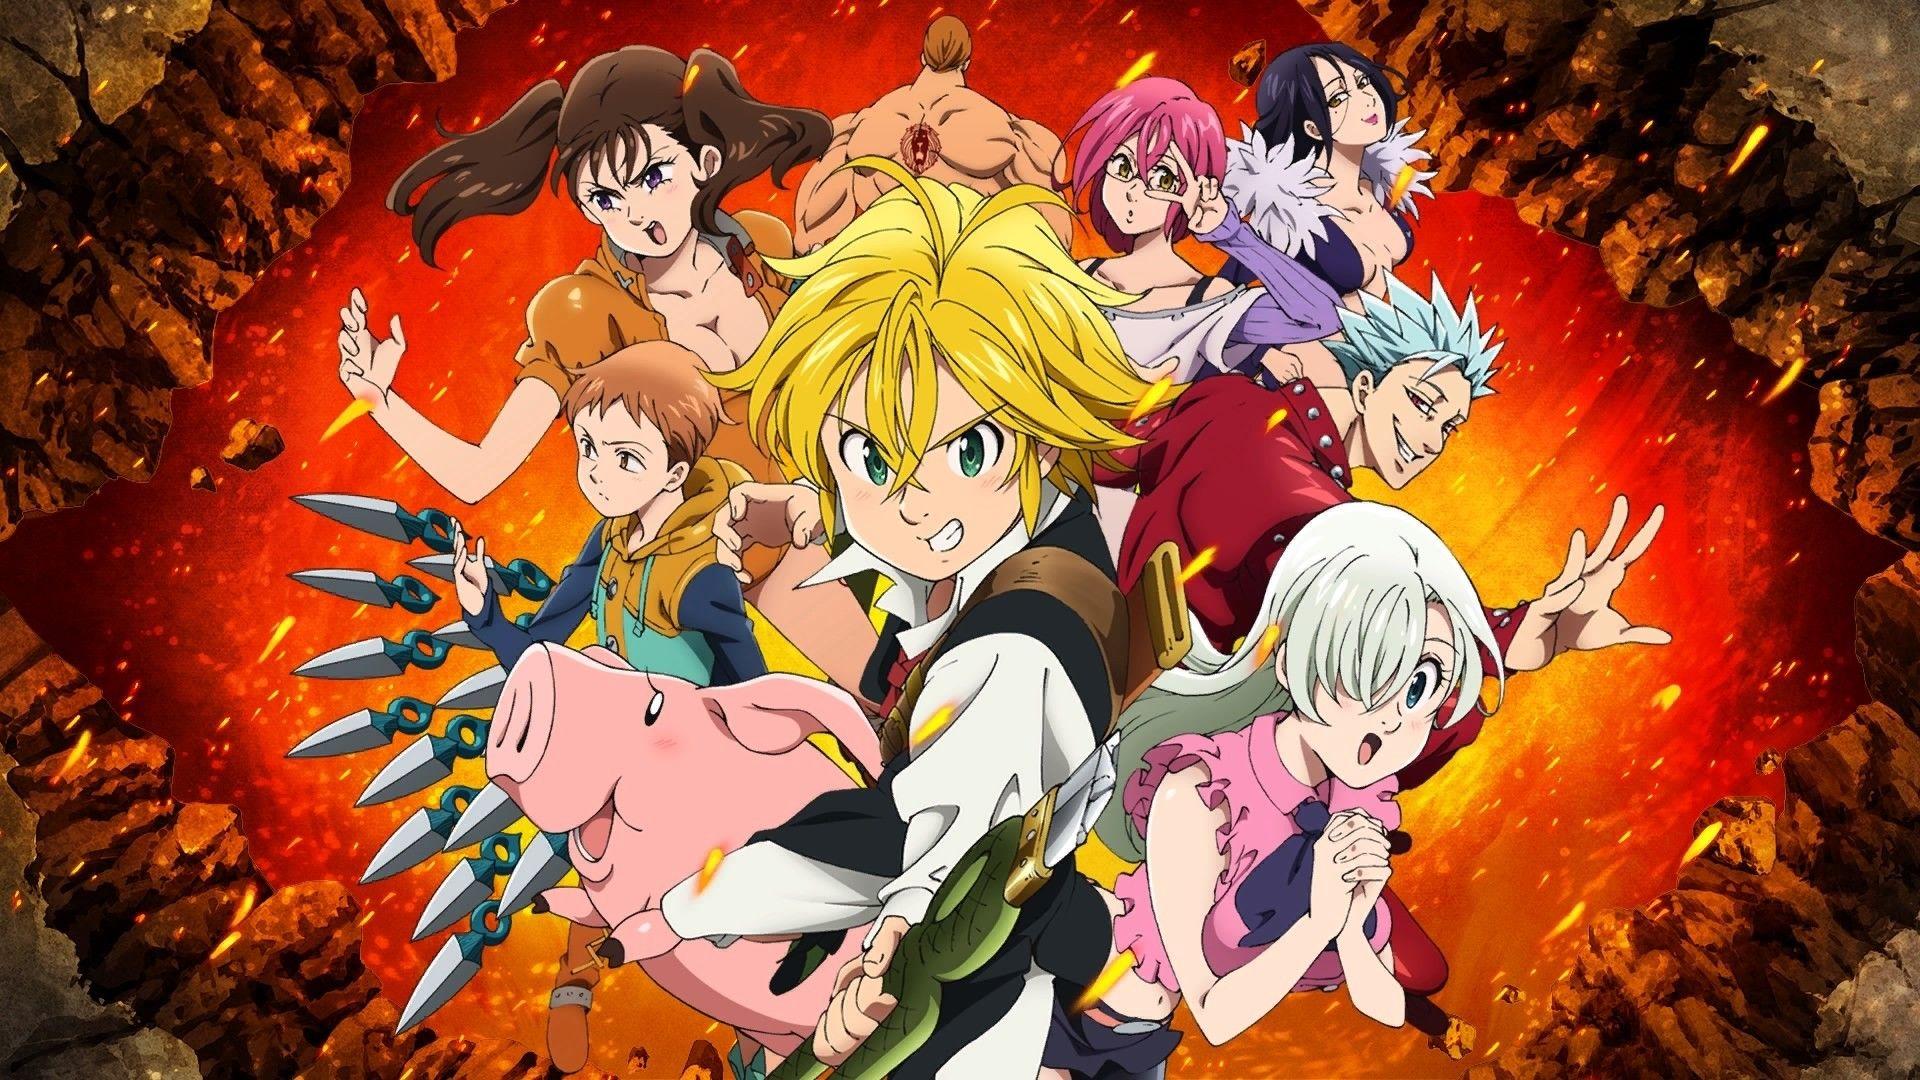 HD wallpaper: Seven Deadly Sins anime wallpaper, Nanatsu no Taizai